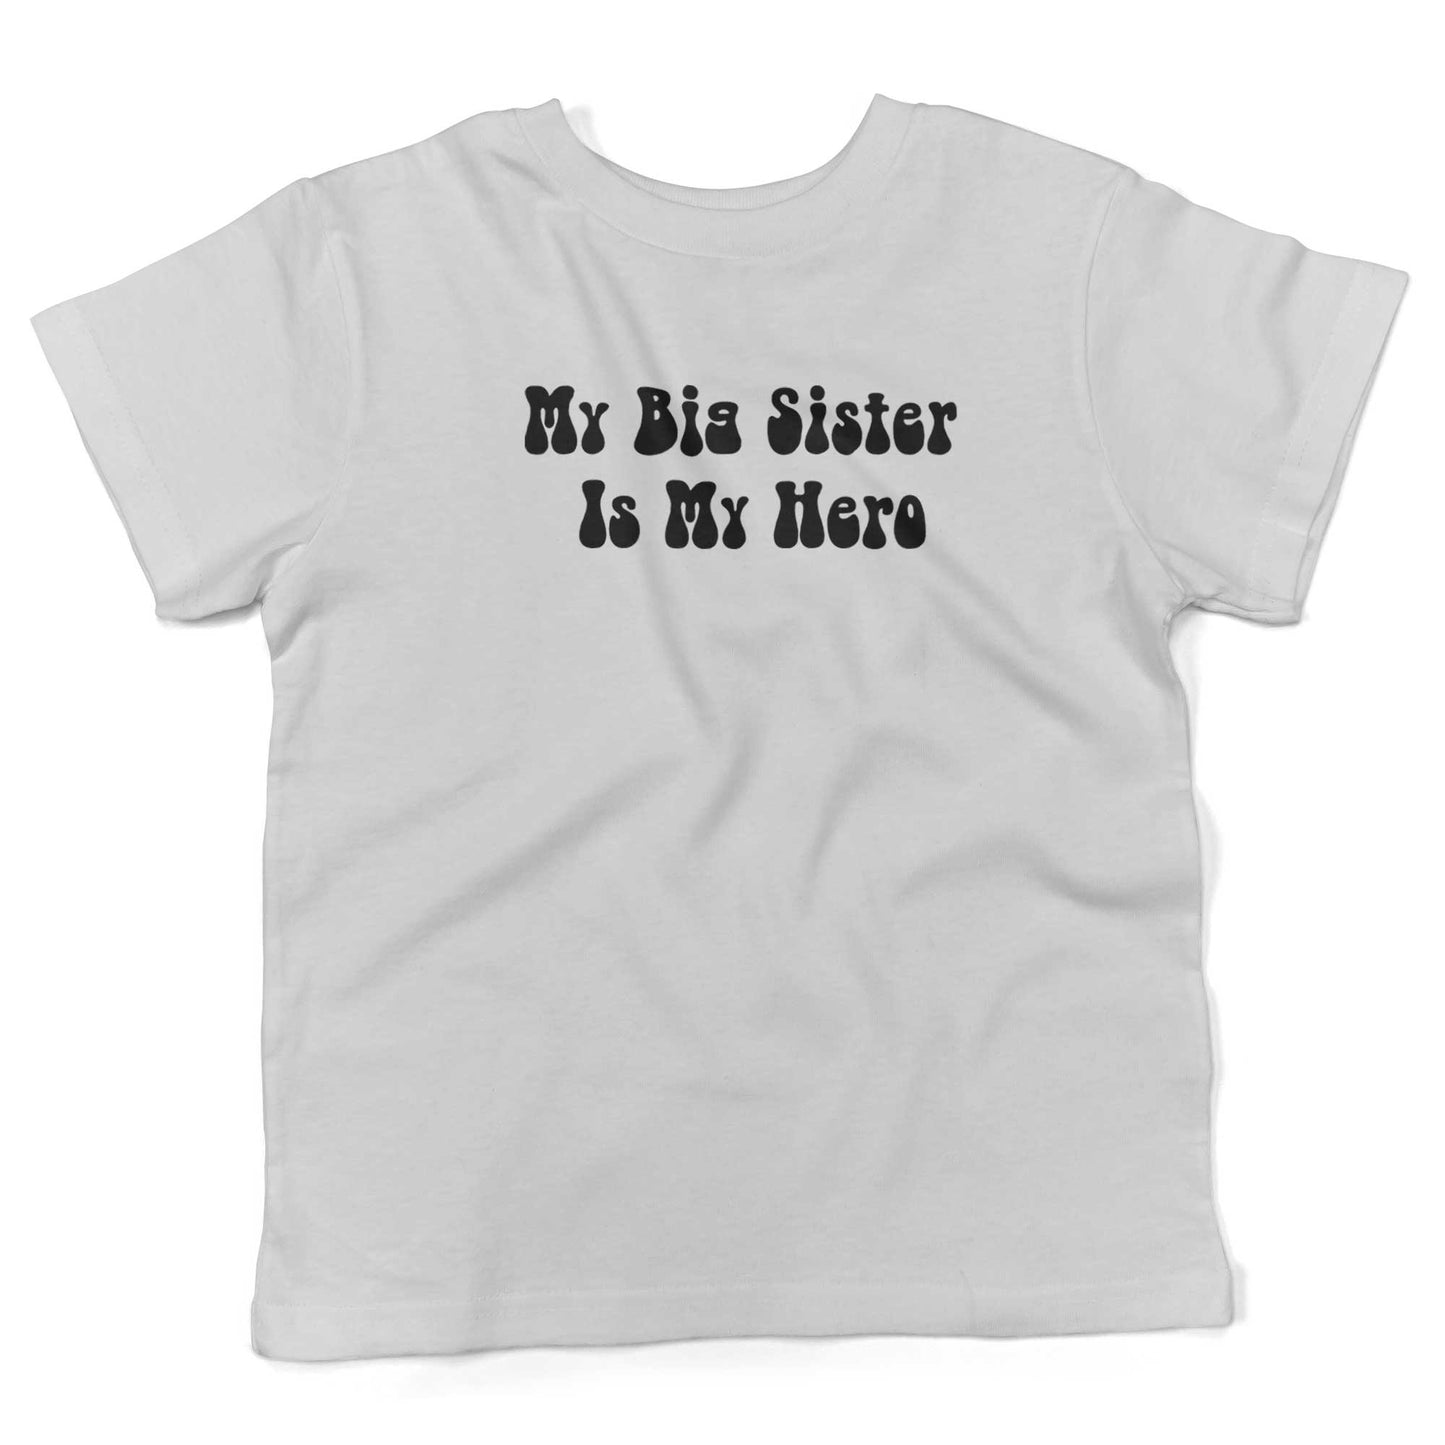 My Big Sister Is My Hero Toddler Shirt-White-2T